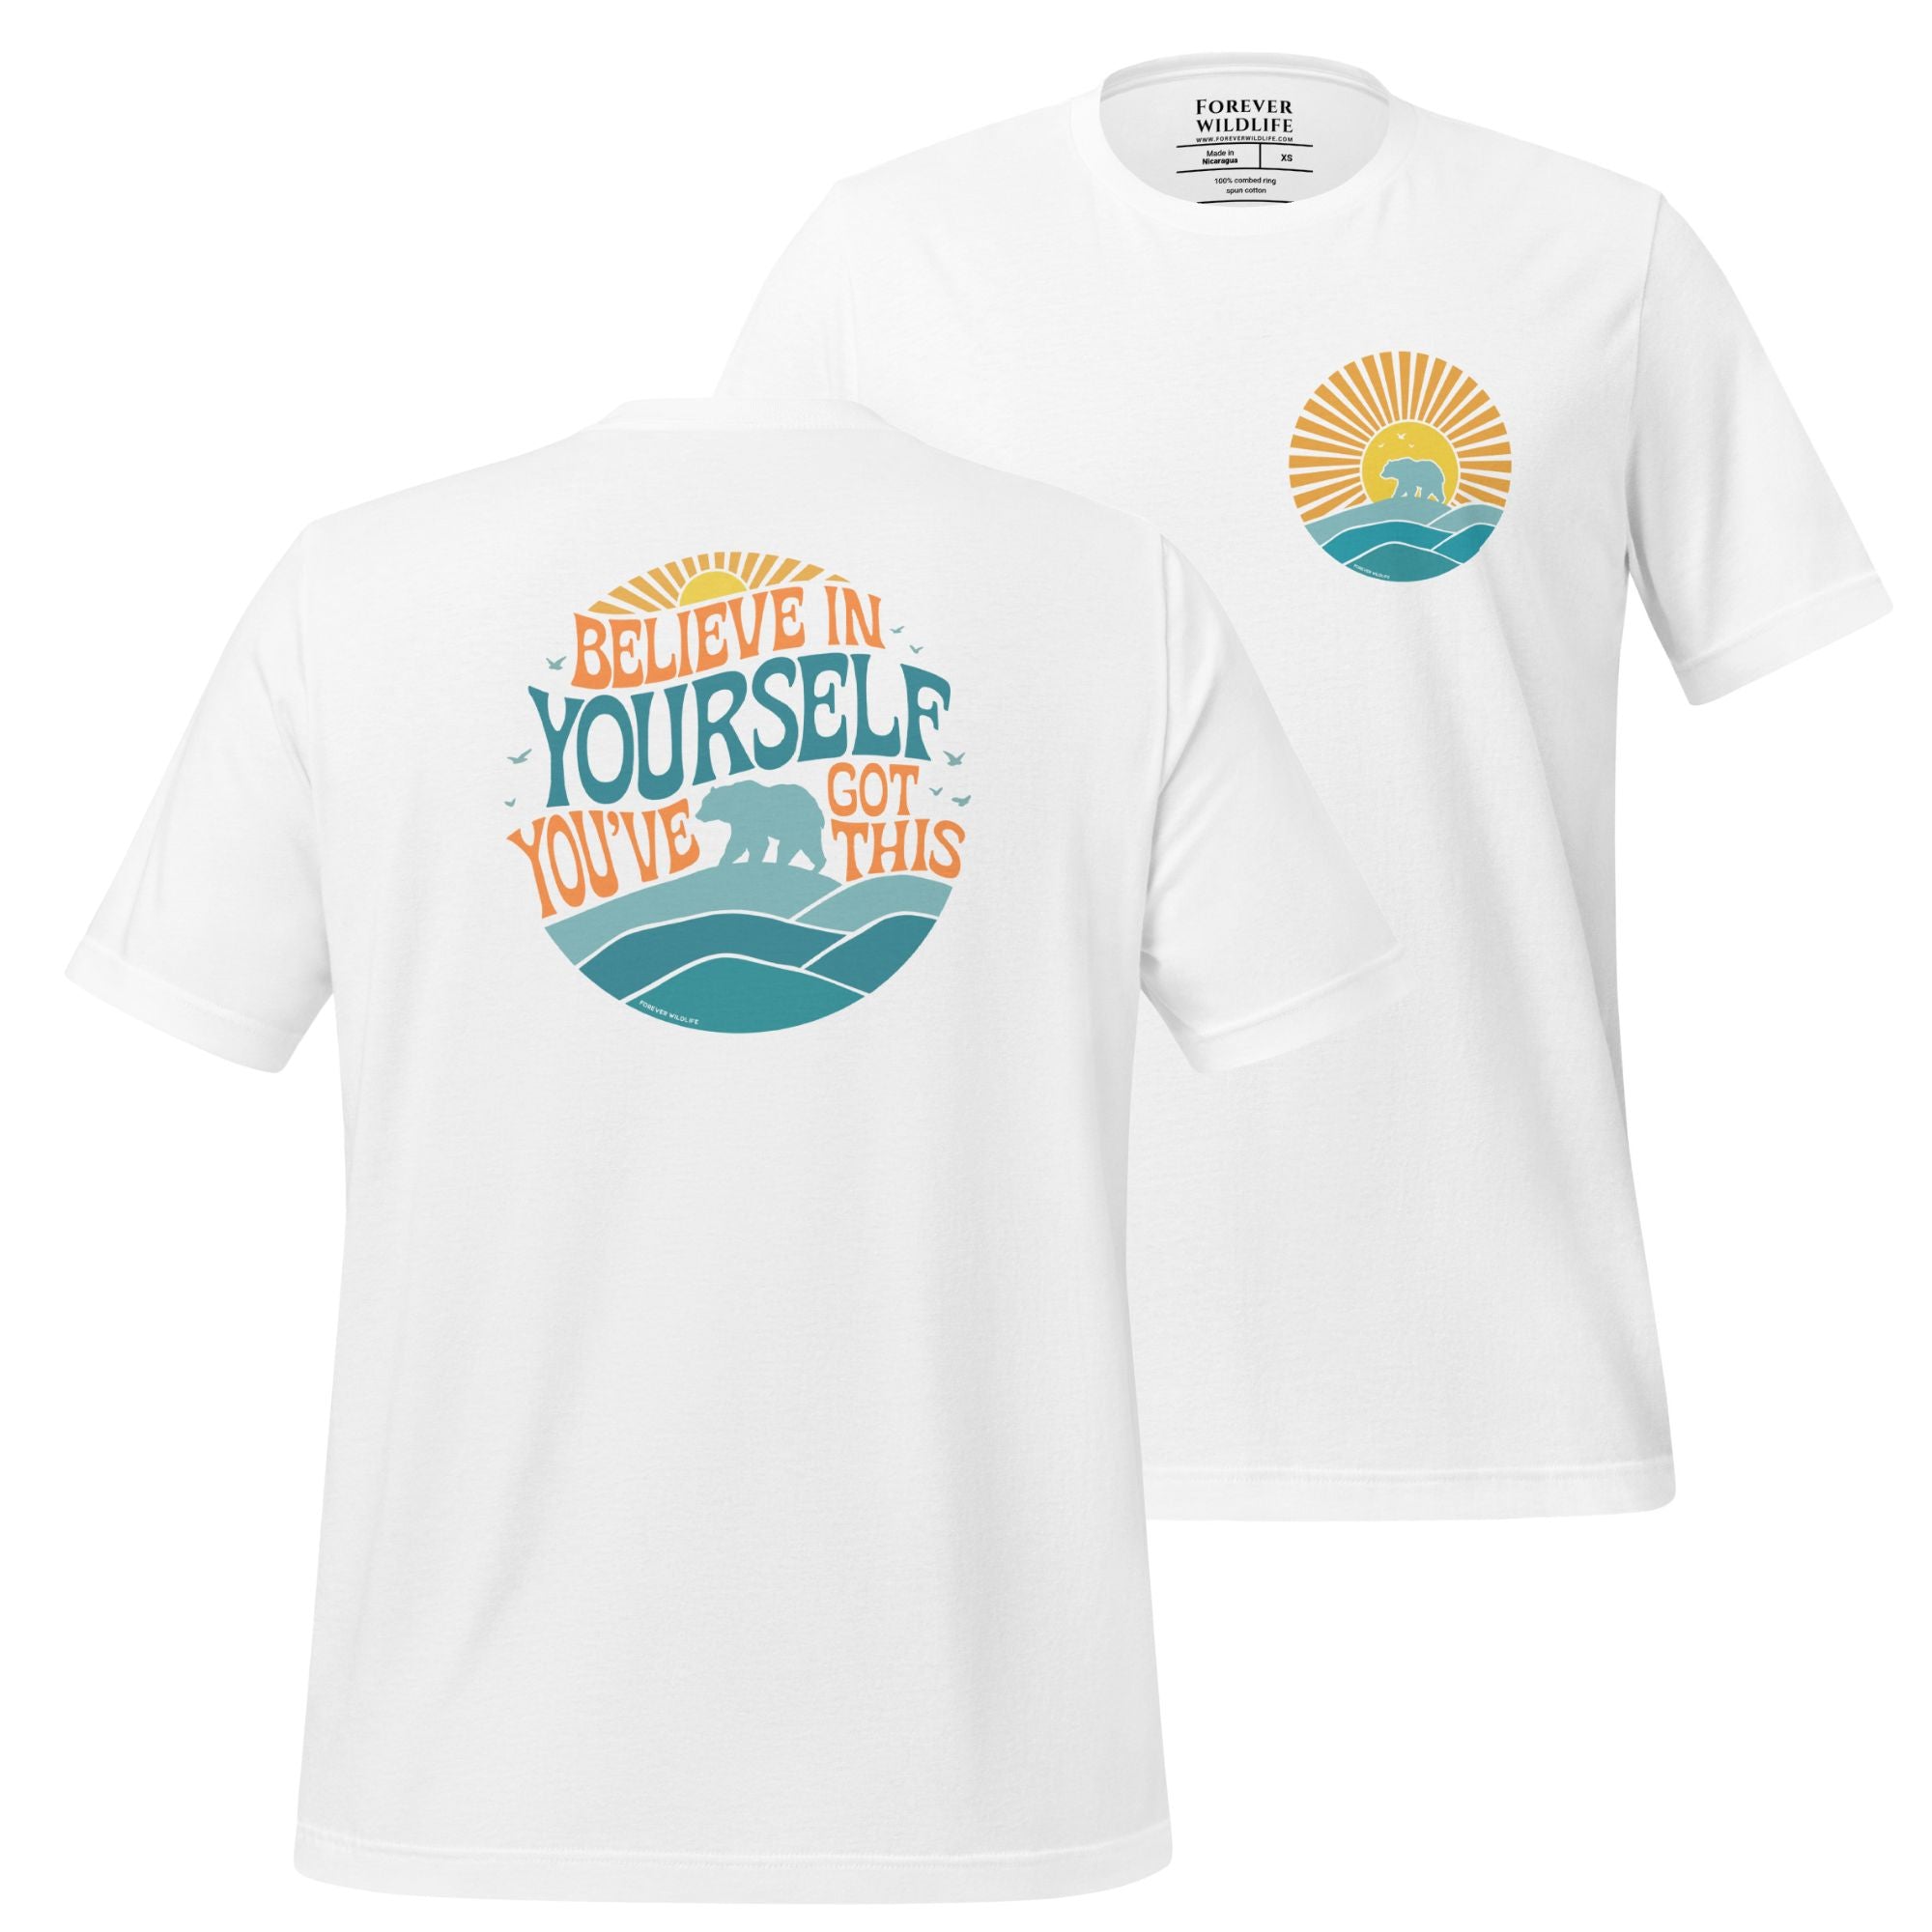 Polar Bear Shirt, stunning white Polar Bear T-Shirt with Polar Bear graphic with sunset by Forever Wildlife selling Wildlife T Shirts.